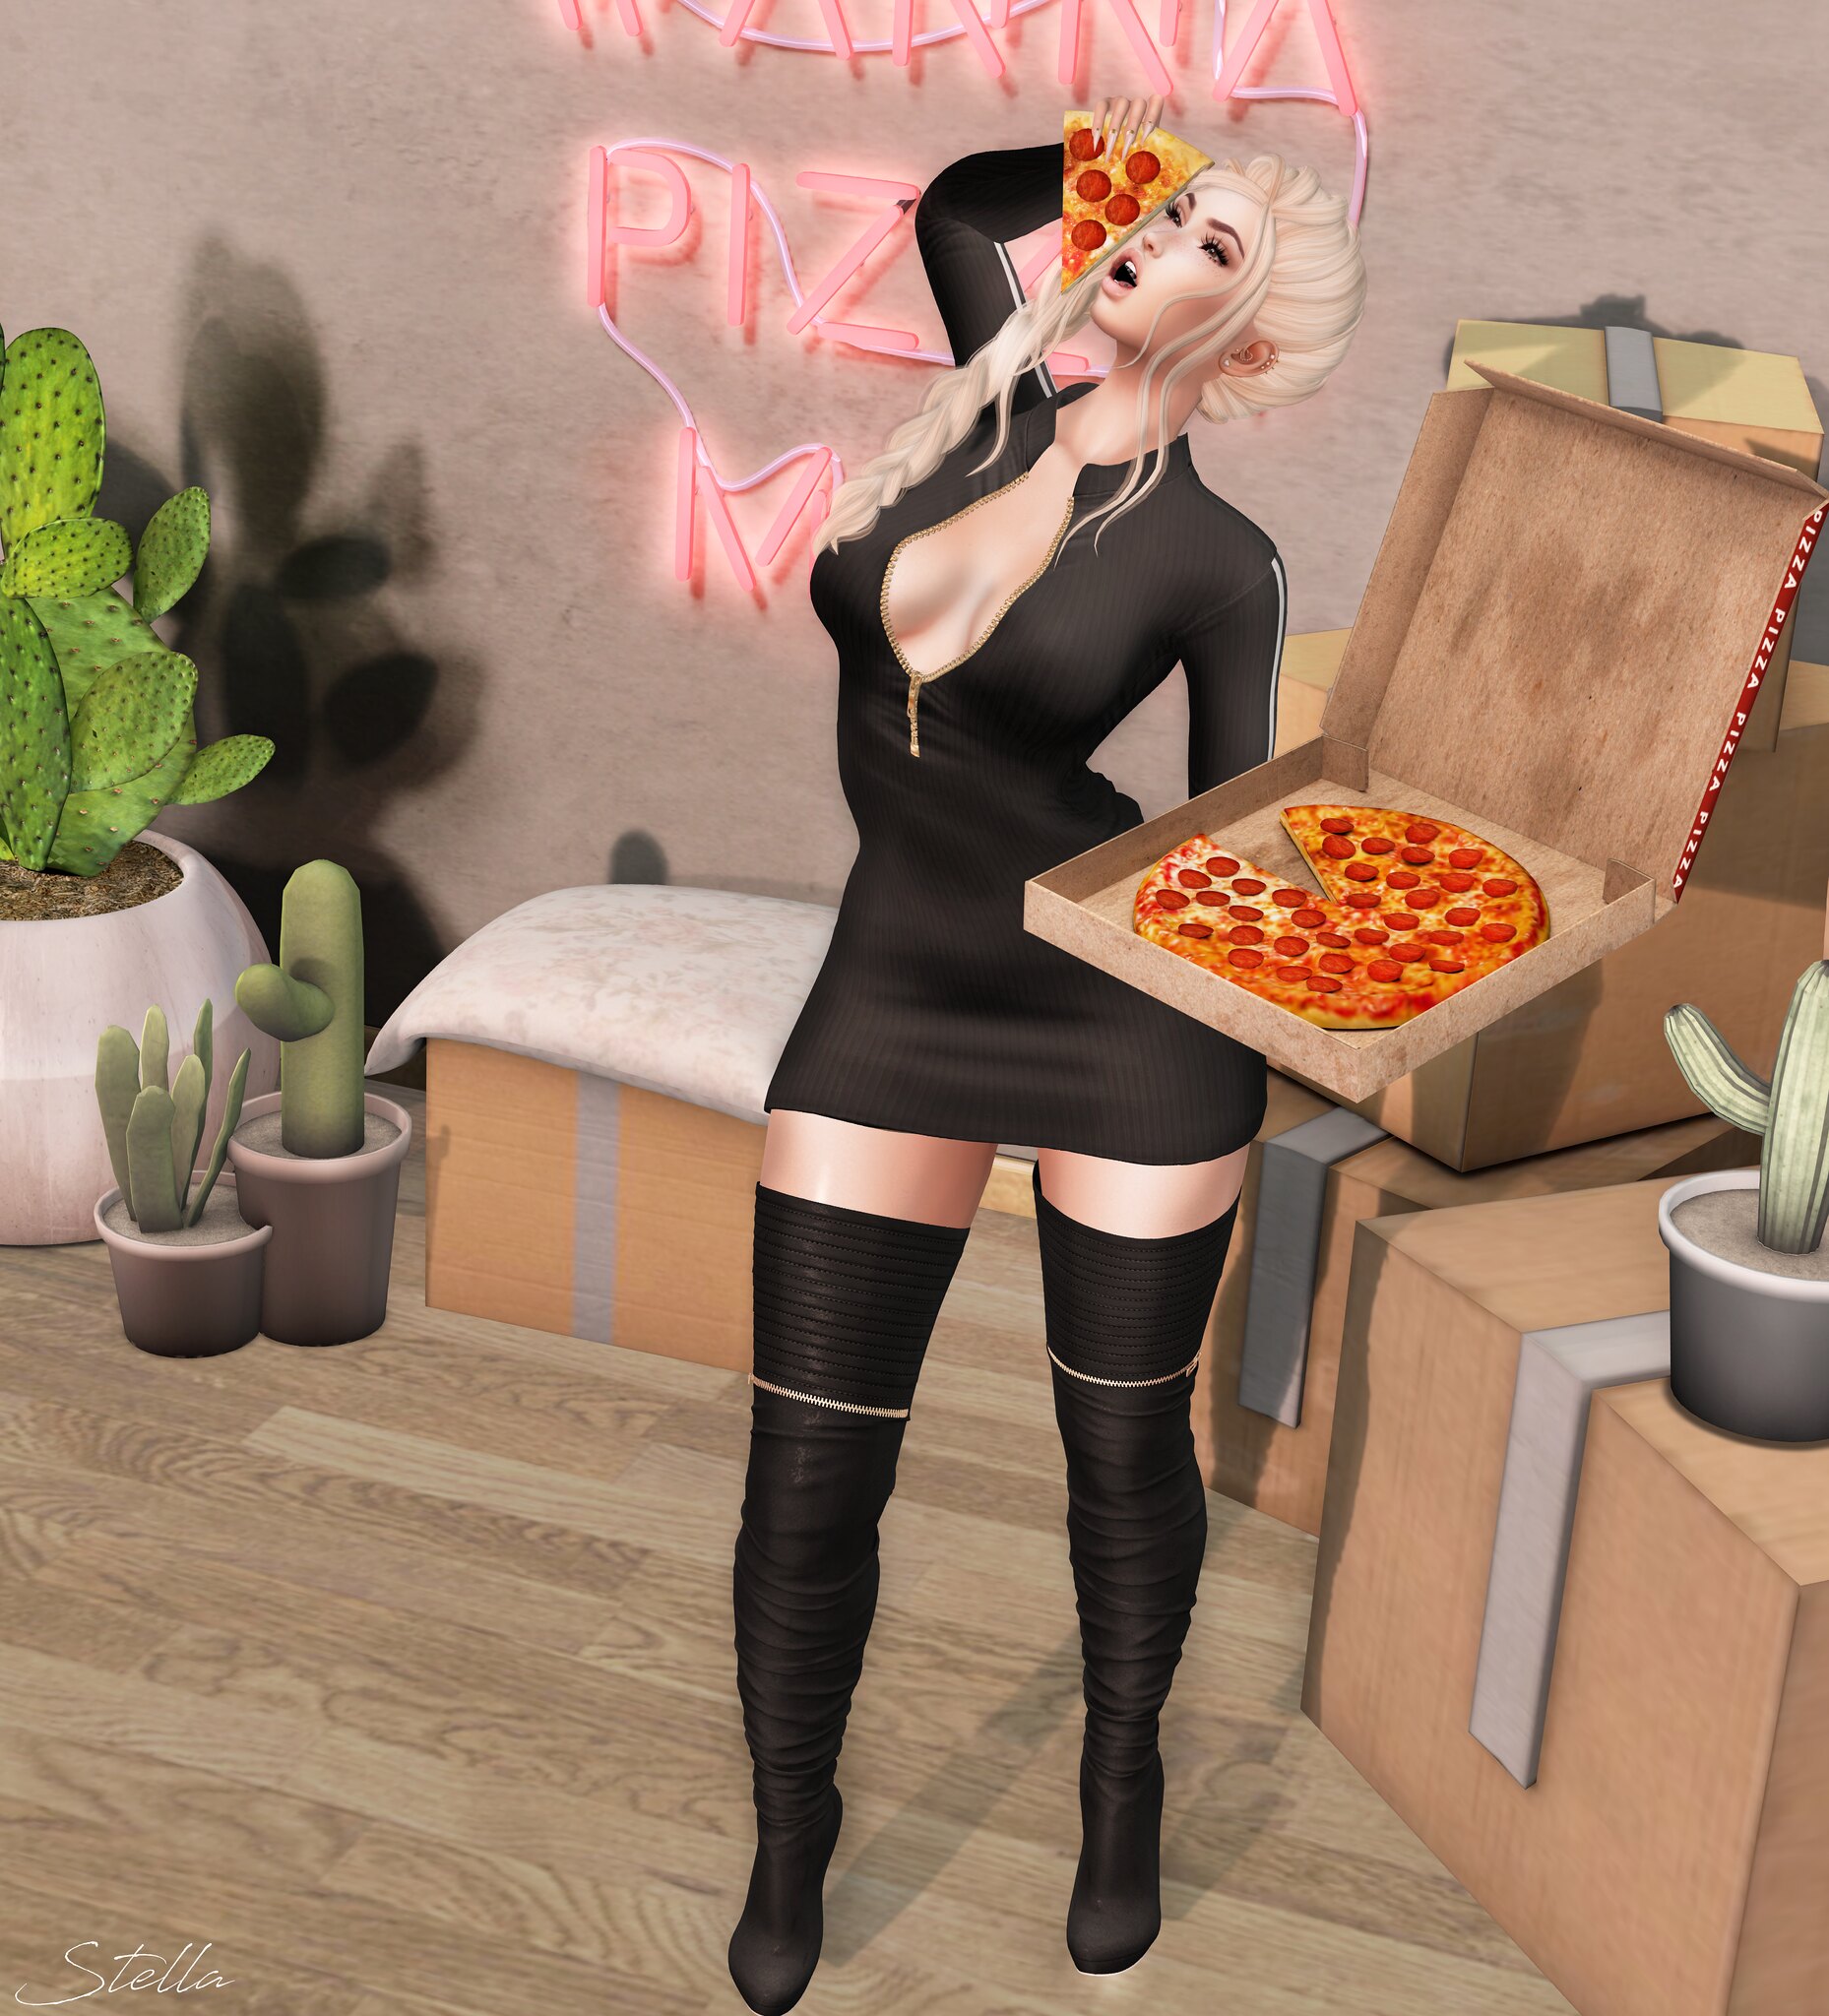 U wanna pizza me?